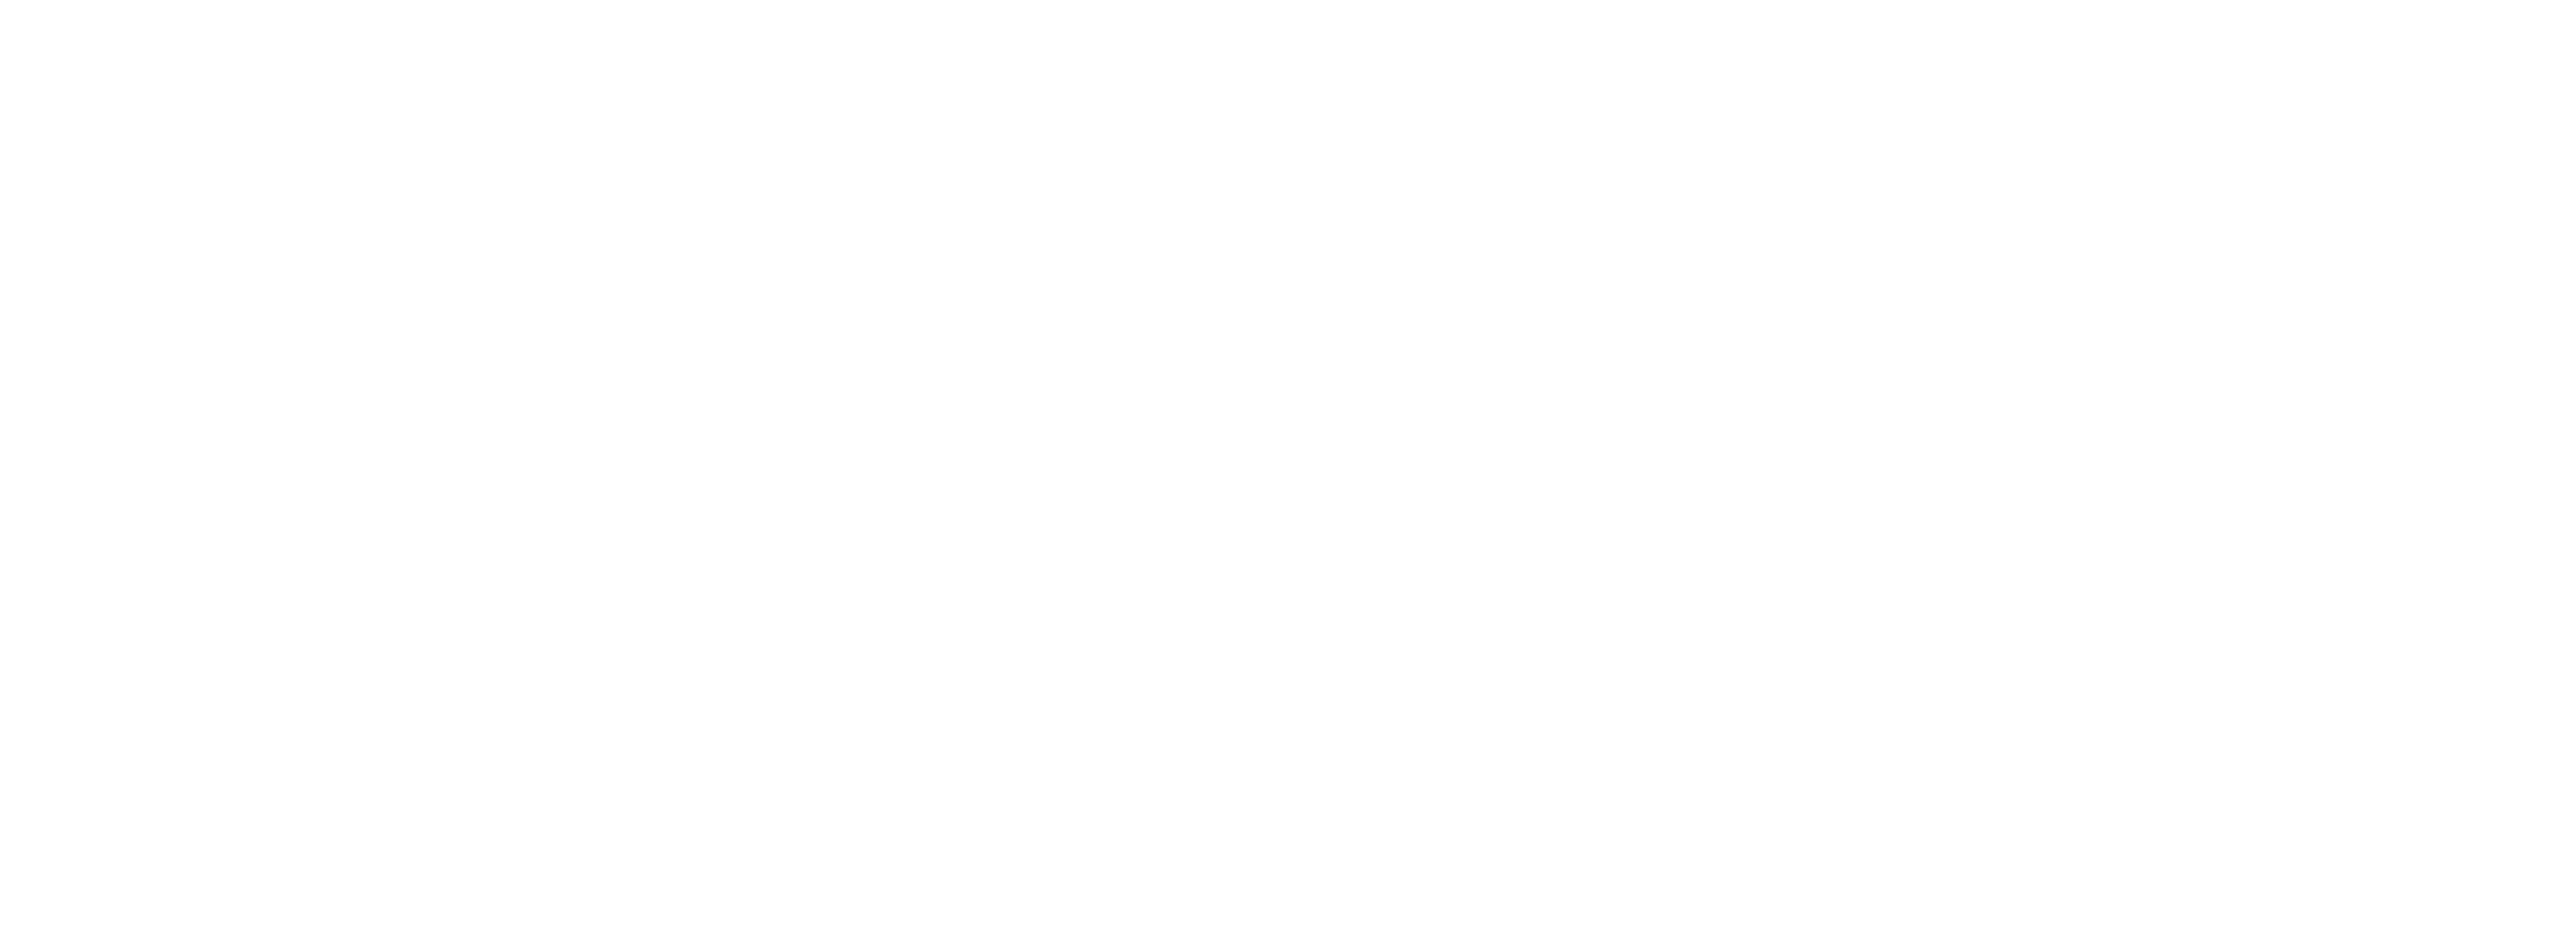 Ryuichi adachi